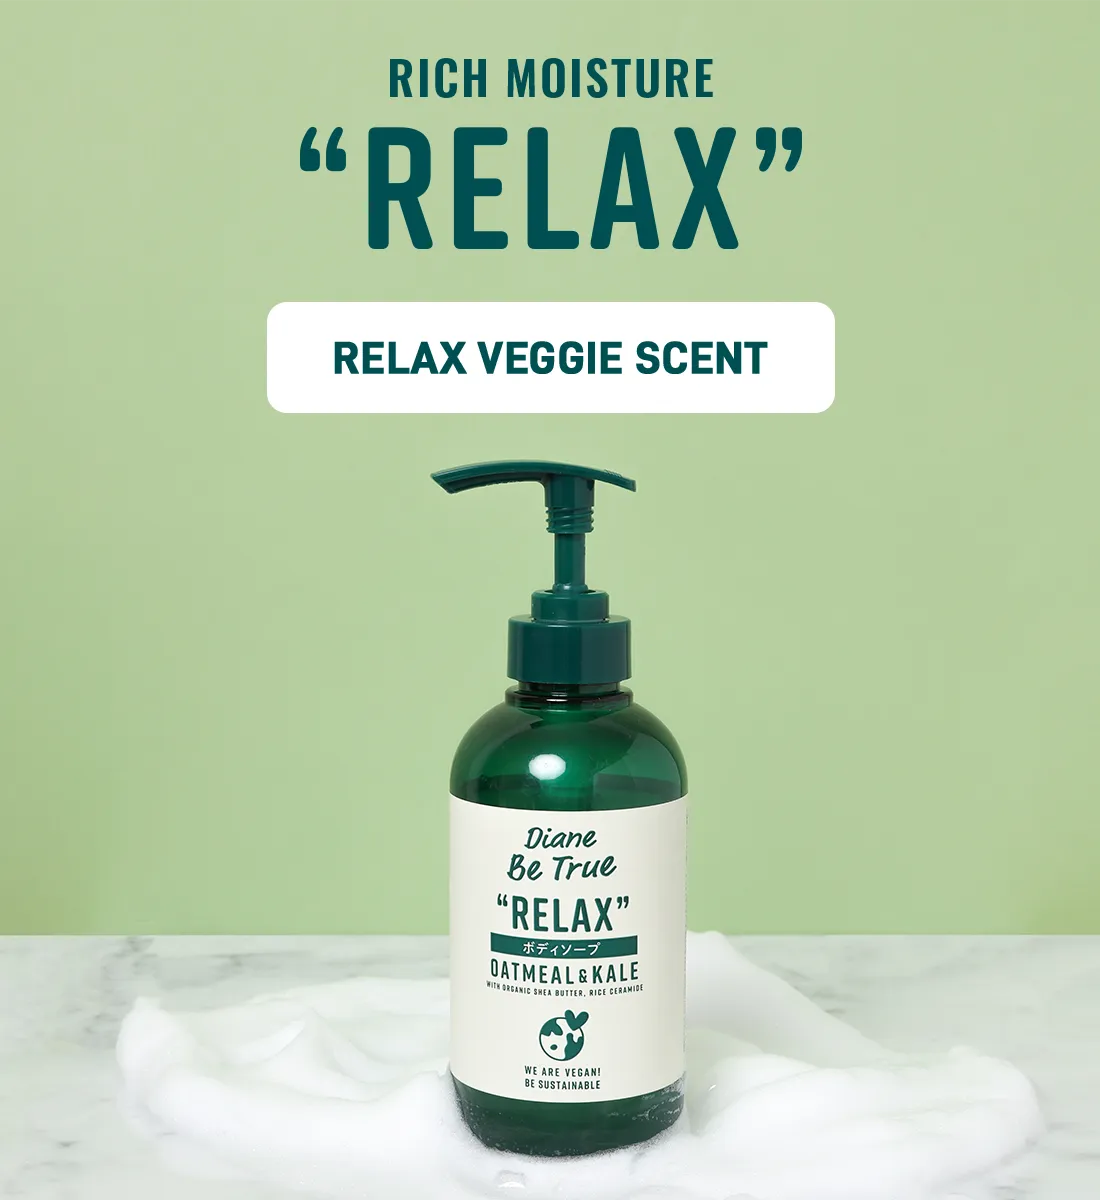 Rich Moisture - Relax | Relax Veggie Scent